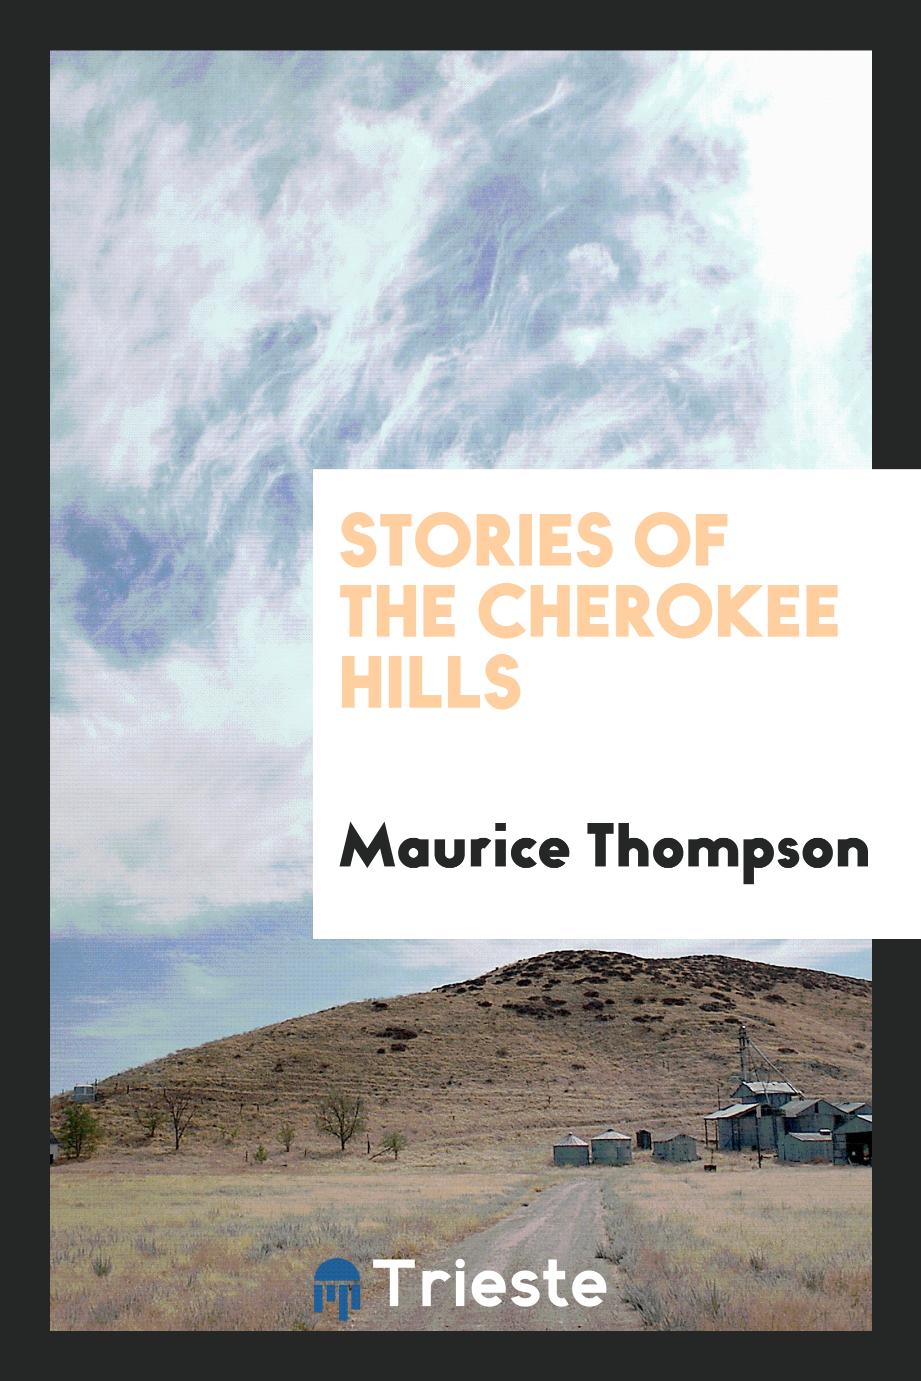 Stories of the Cherokee hills